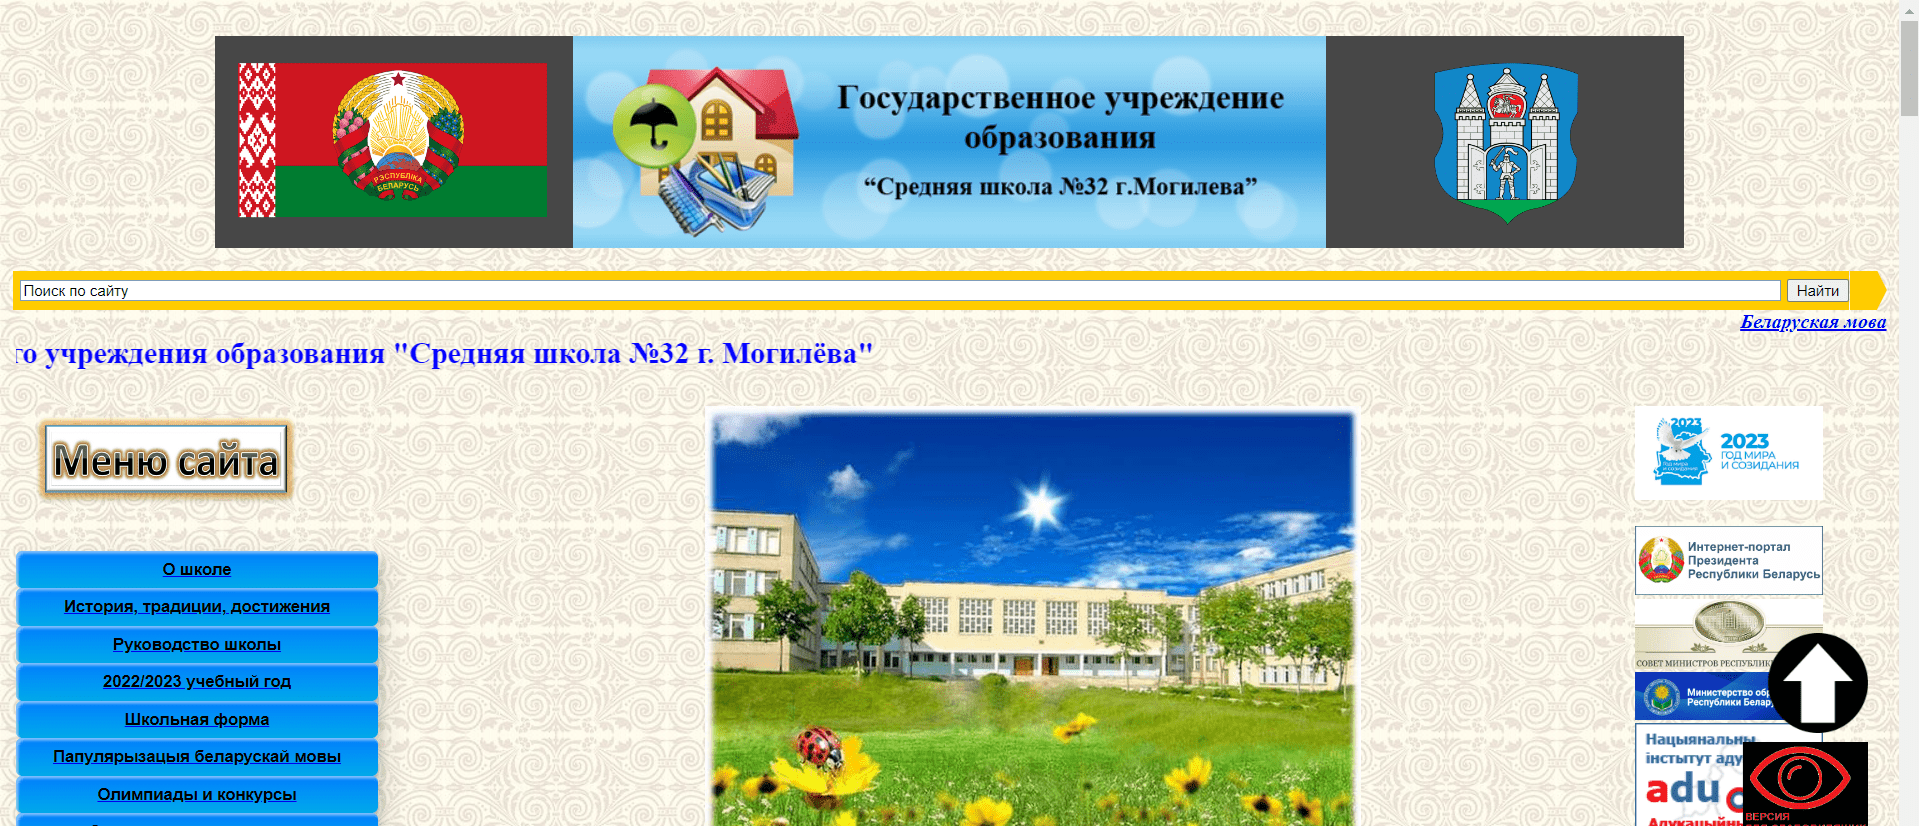 Средняя школа №32 г. Могилёва (school32.mogilev.by)